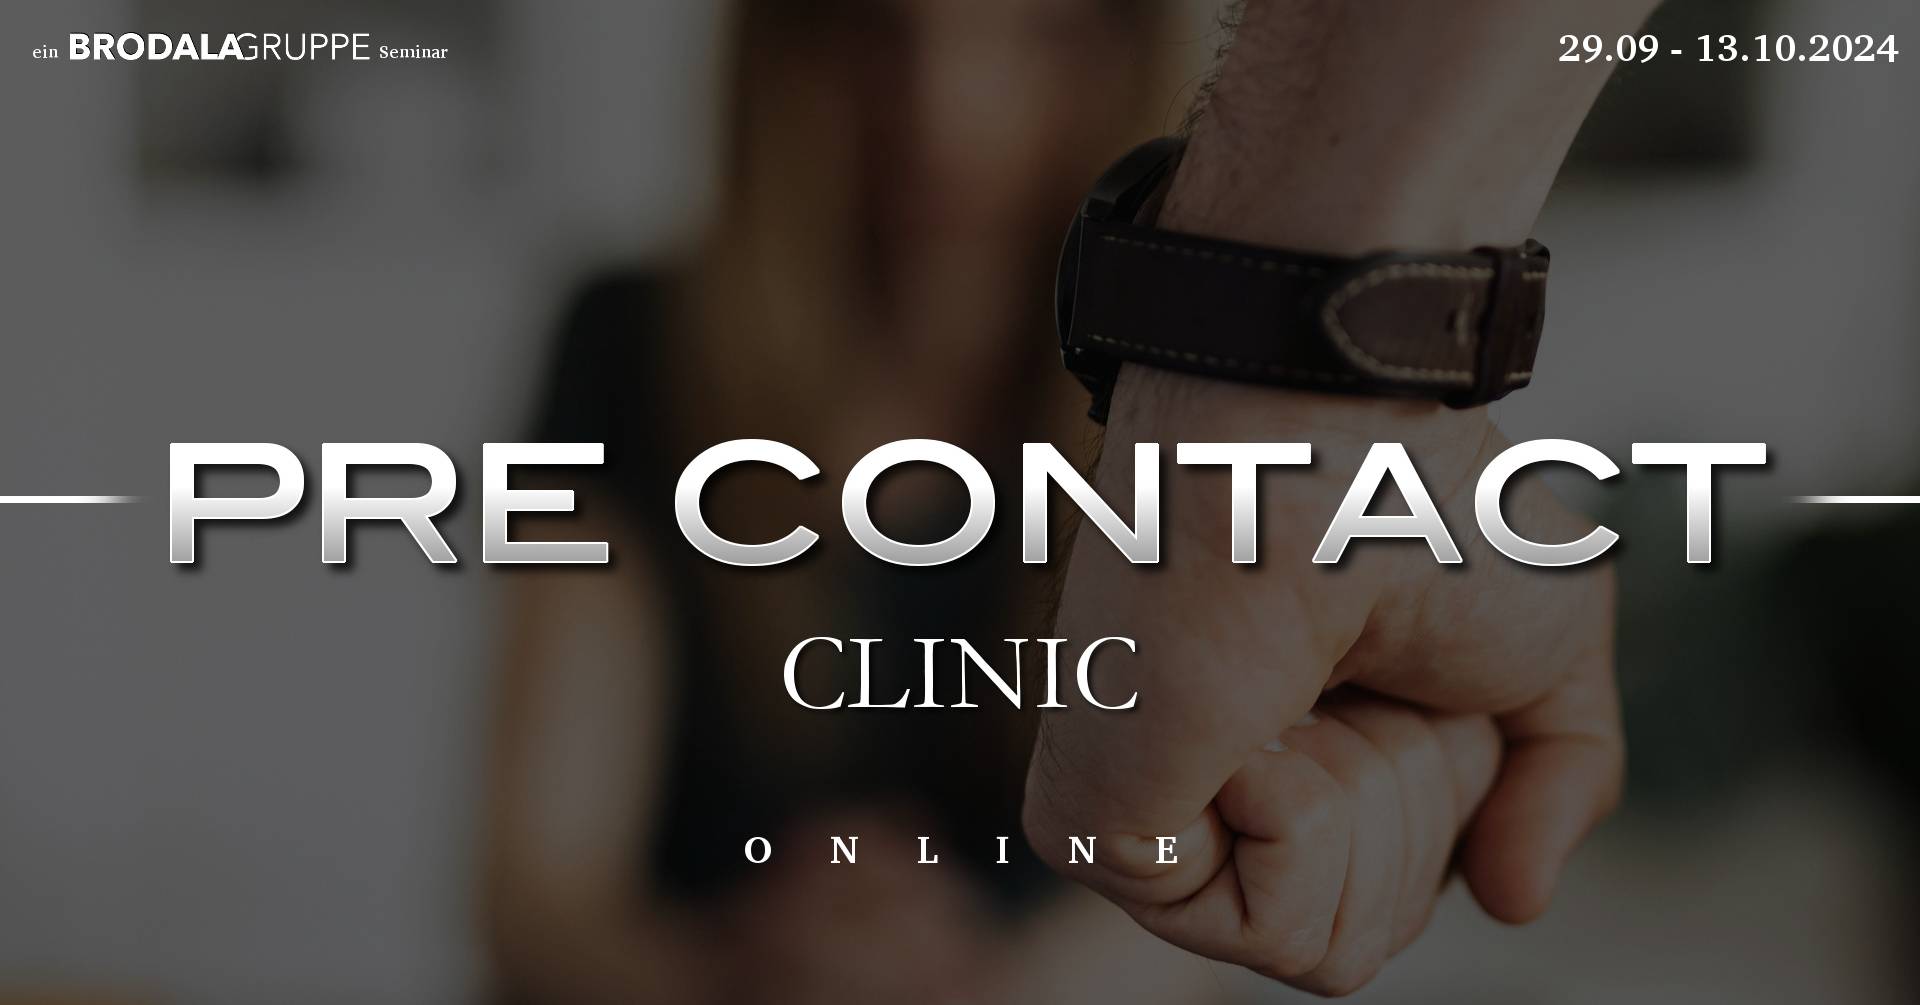 Pre Contact Clinic vom 29. September - 13. Oktober online